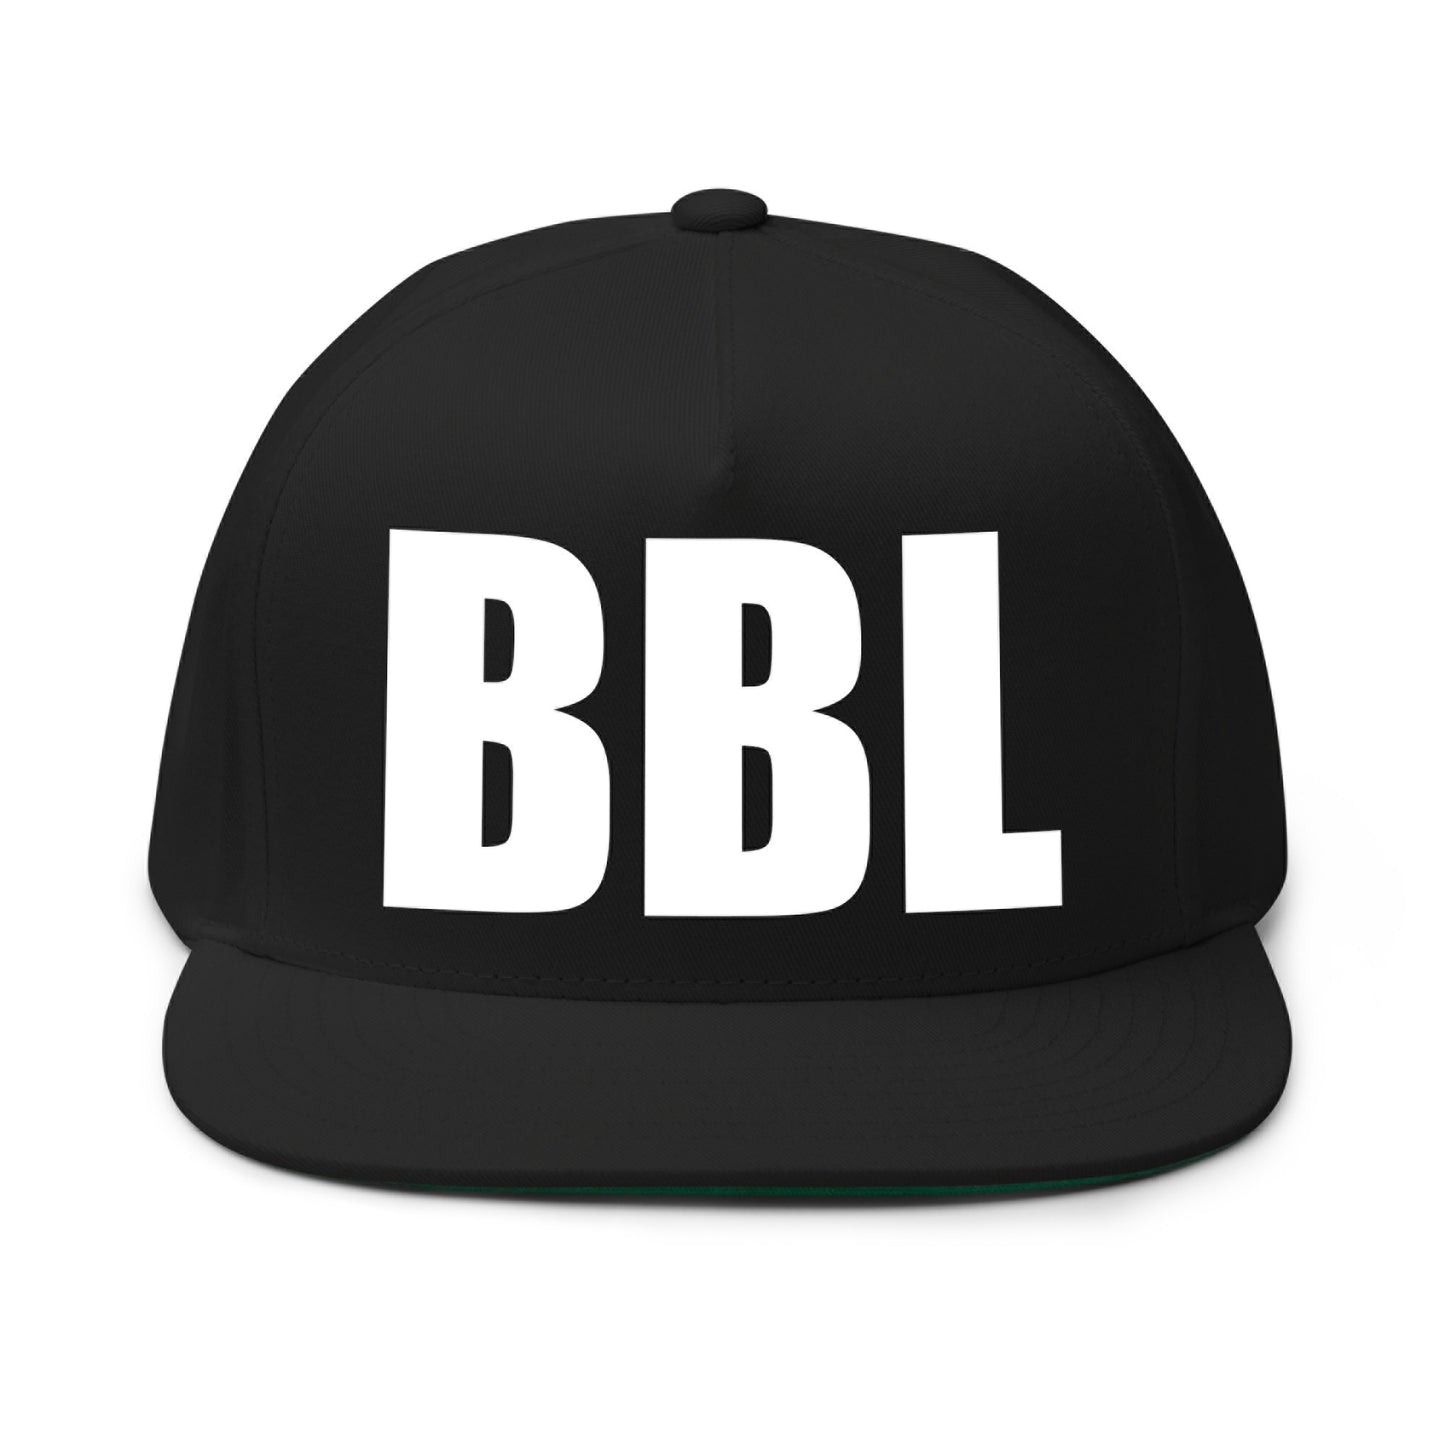 BBL HAT